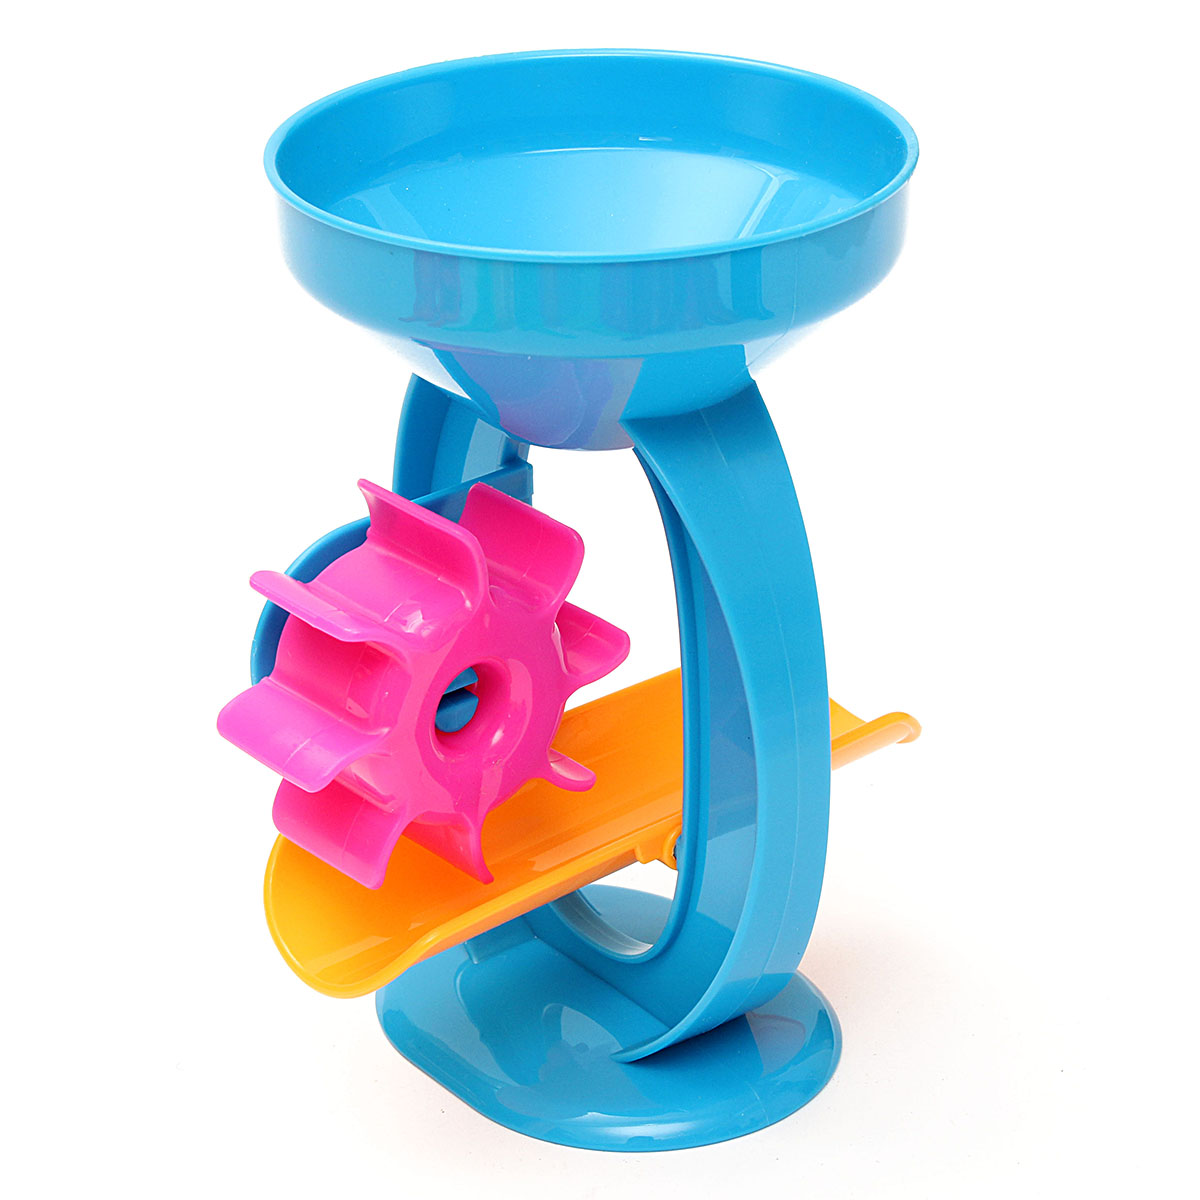 21PCS-Beach-Sand-Play-Toys-Set-Bucket-Rake-Sand-Wheel-Watering-Can-Mold-1066765